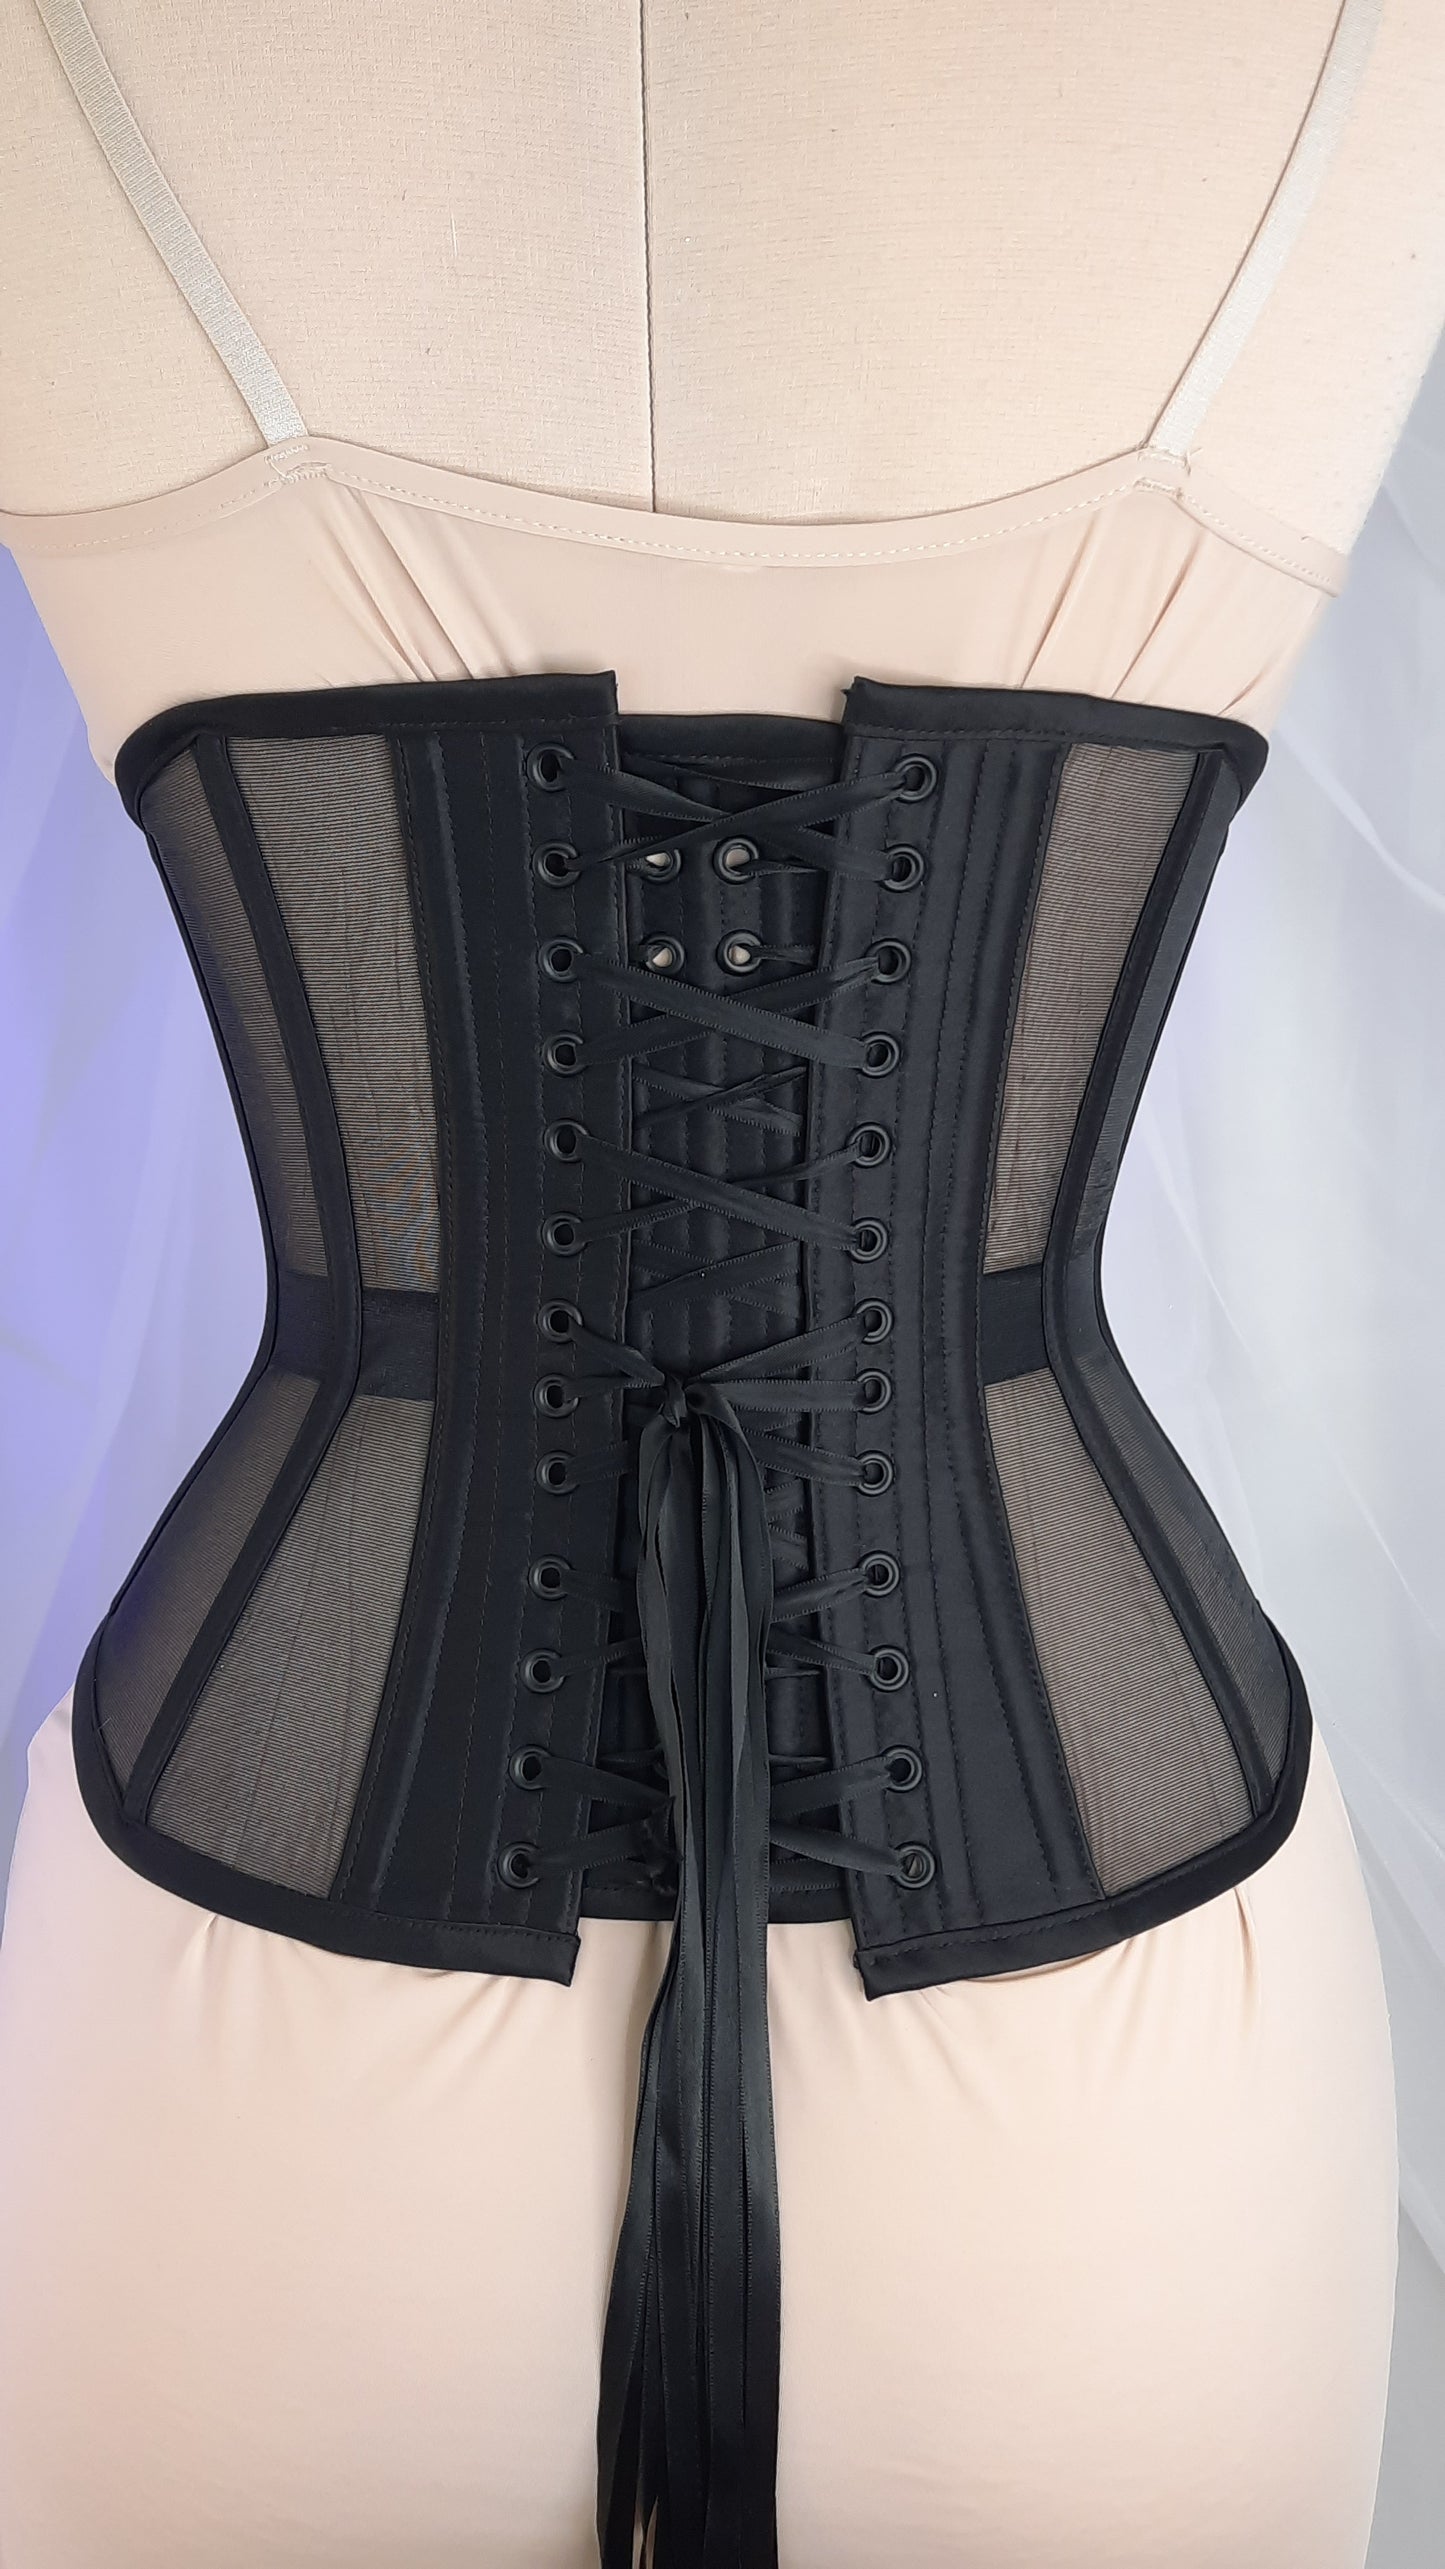 Underbust mesh corset